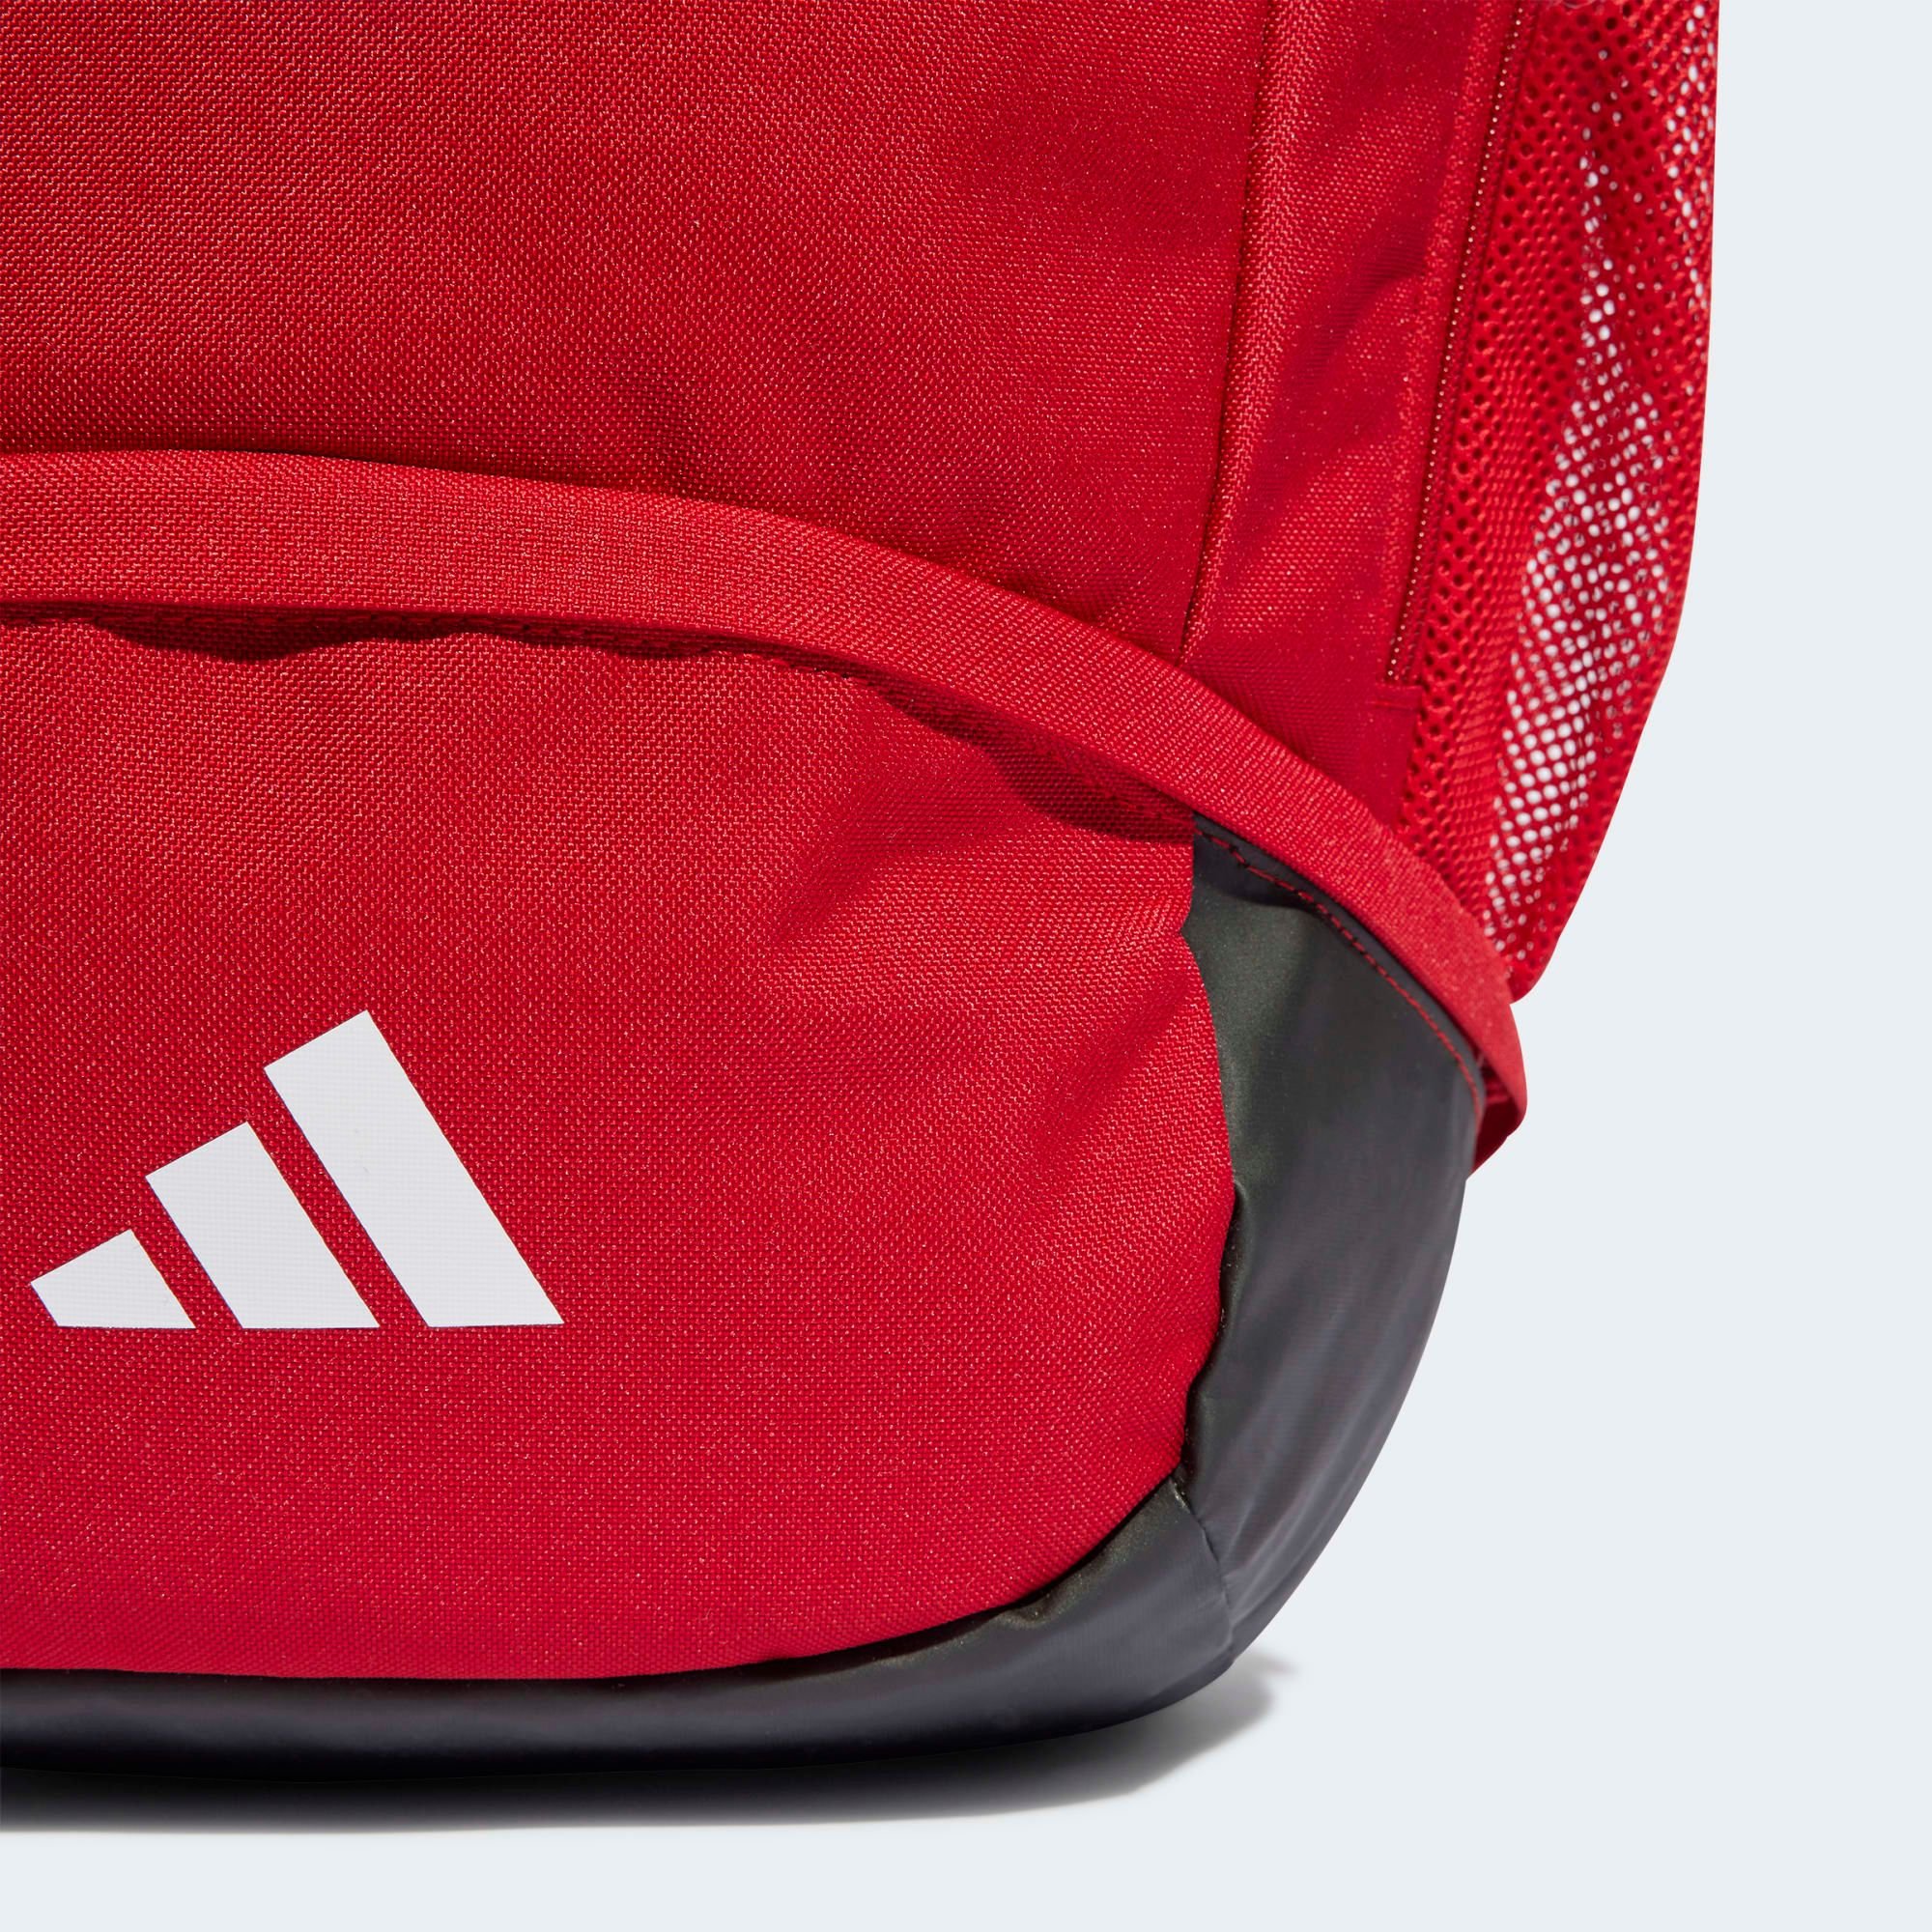  adidas Tiro 23 League Backpack - Red 